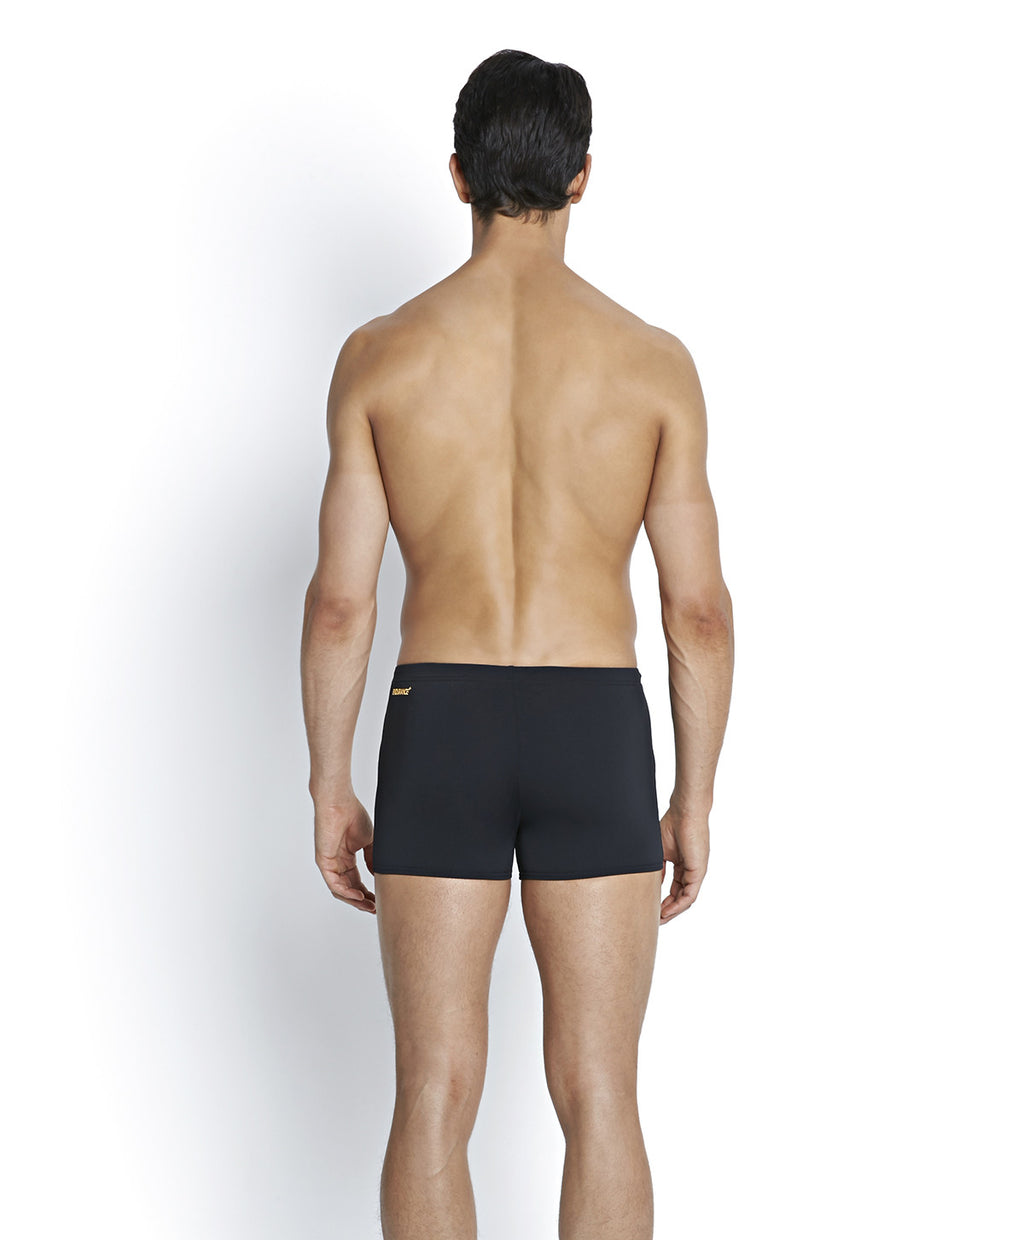 The Beach Company India - Online swimwear shop - Buy speedo swimsuits for men online - Speedo swimming trunks for boys